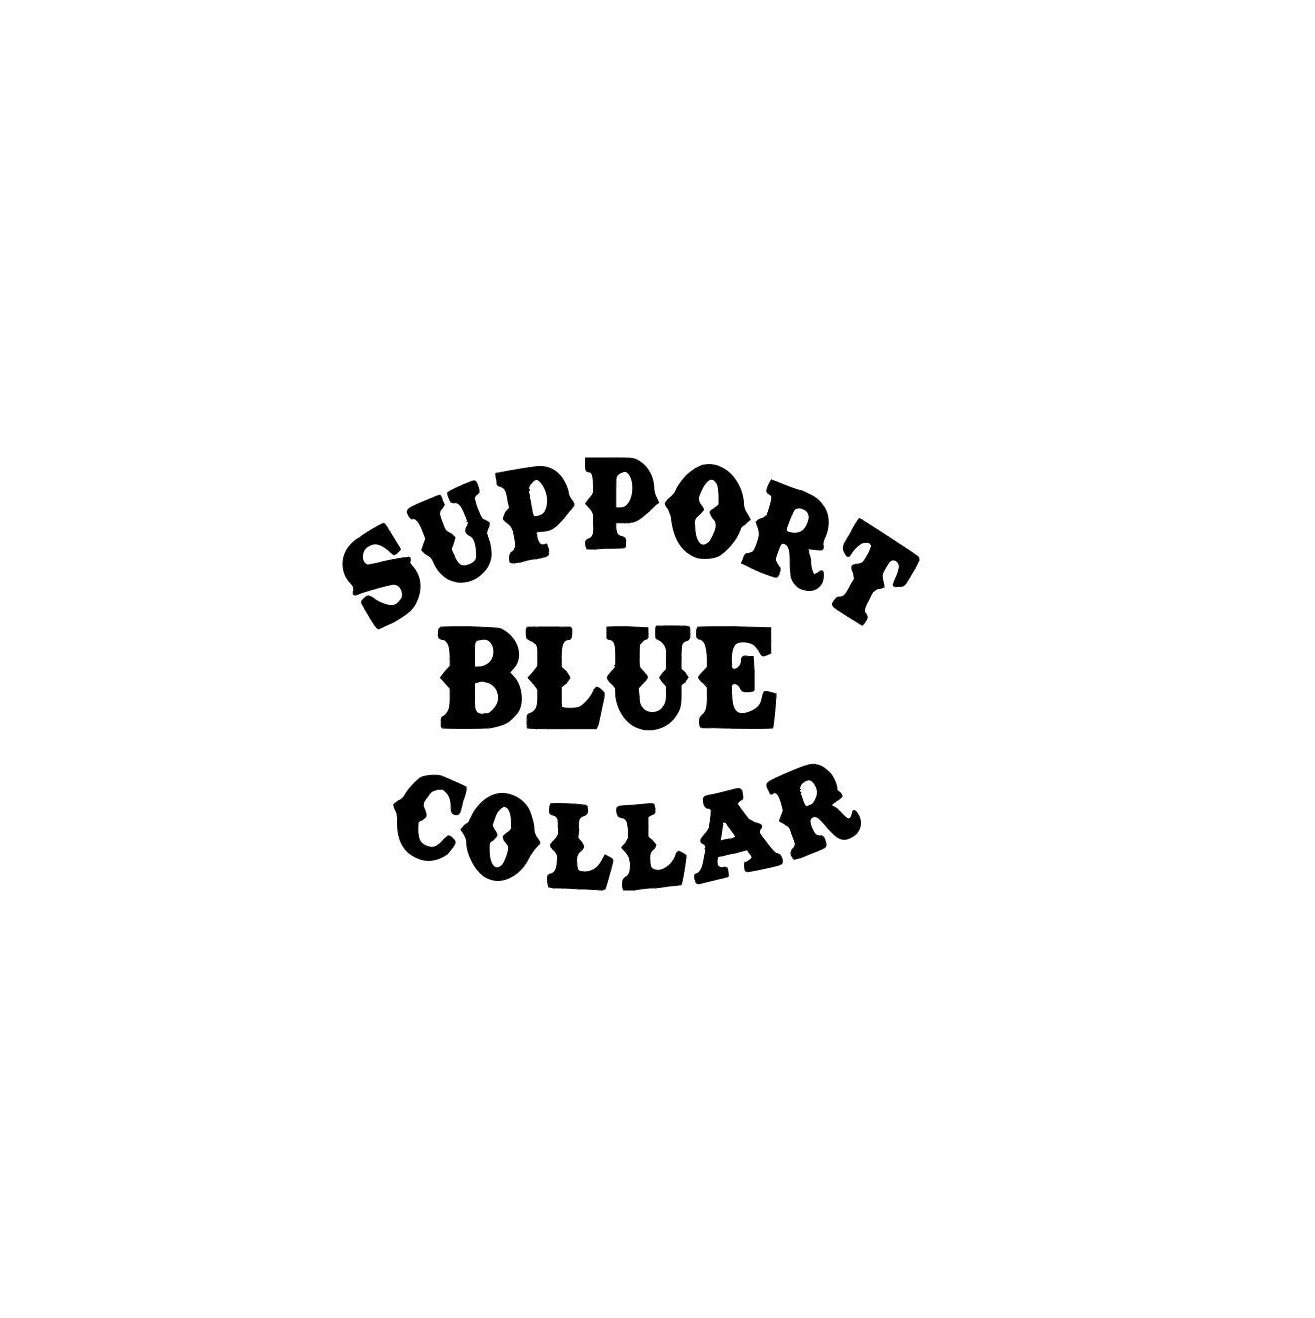 Make Blue Collar Great Again 3.5x1.5 Sticker – Blue Collar Rebellion Co.